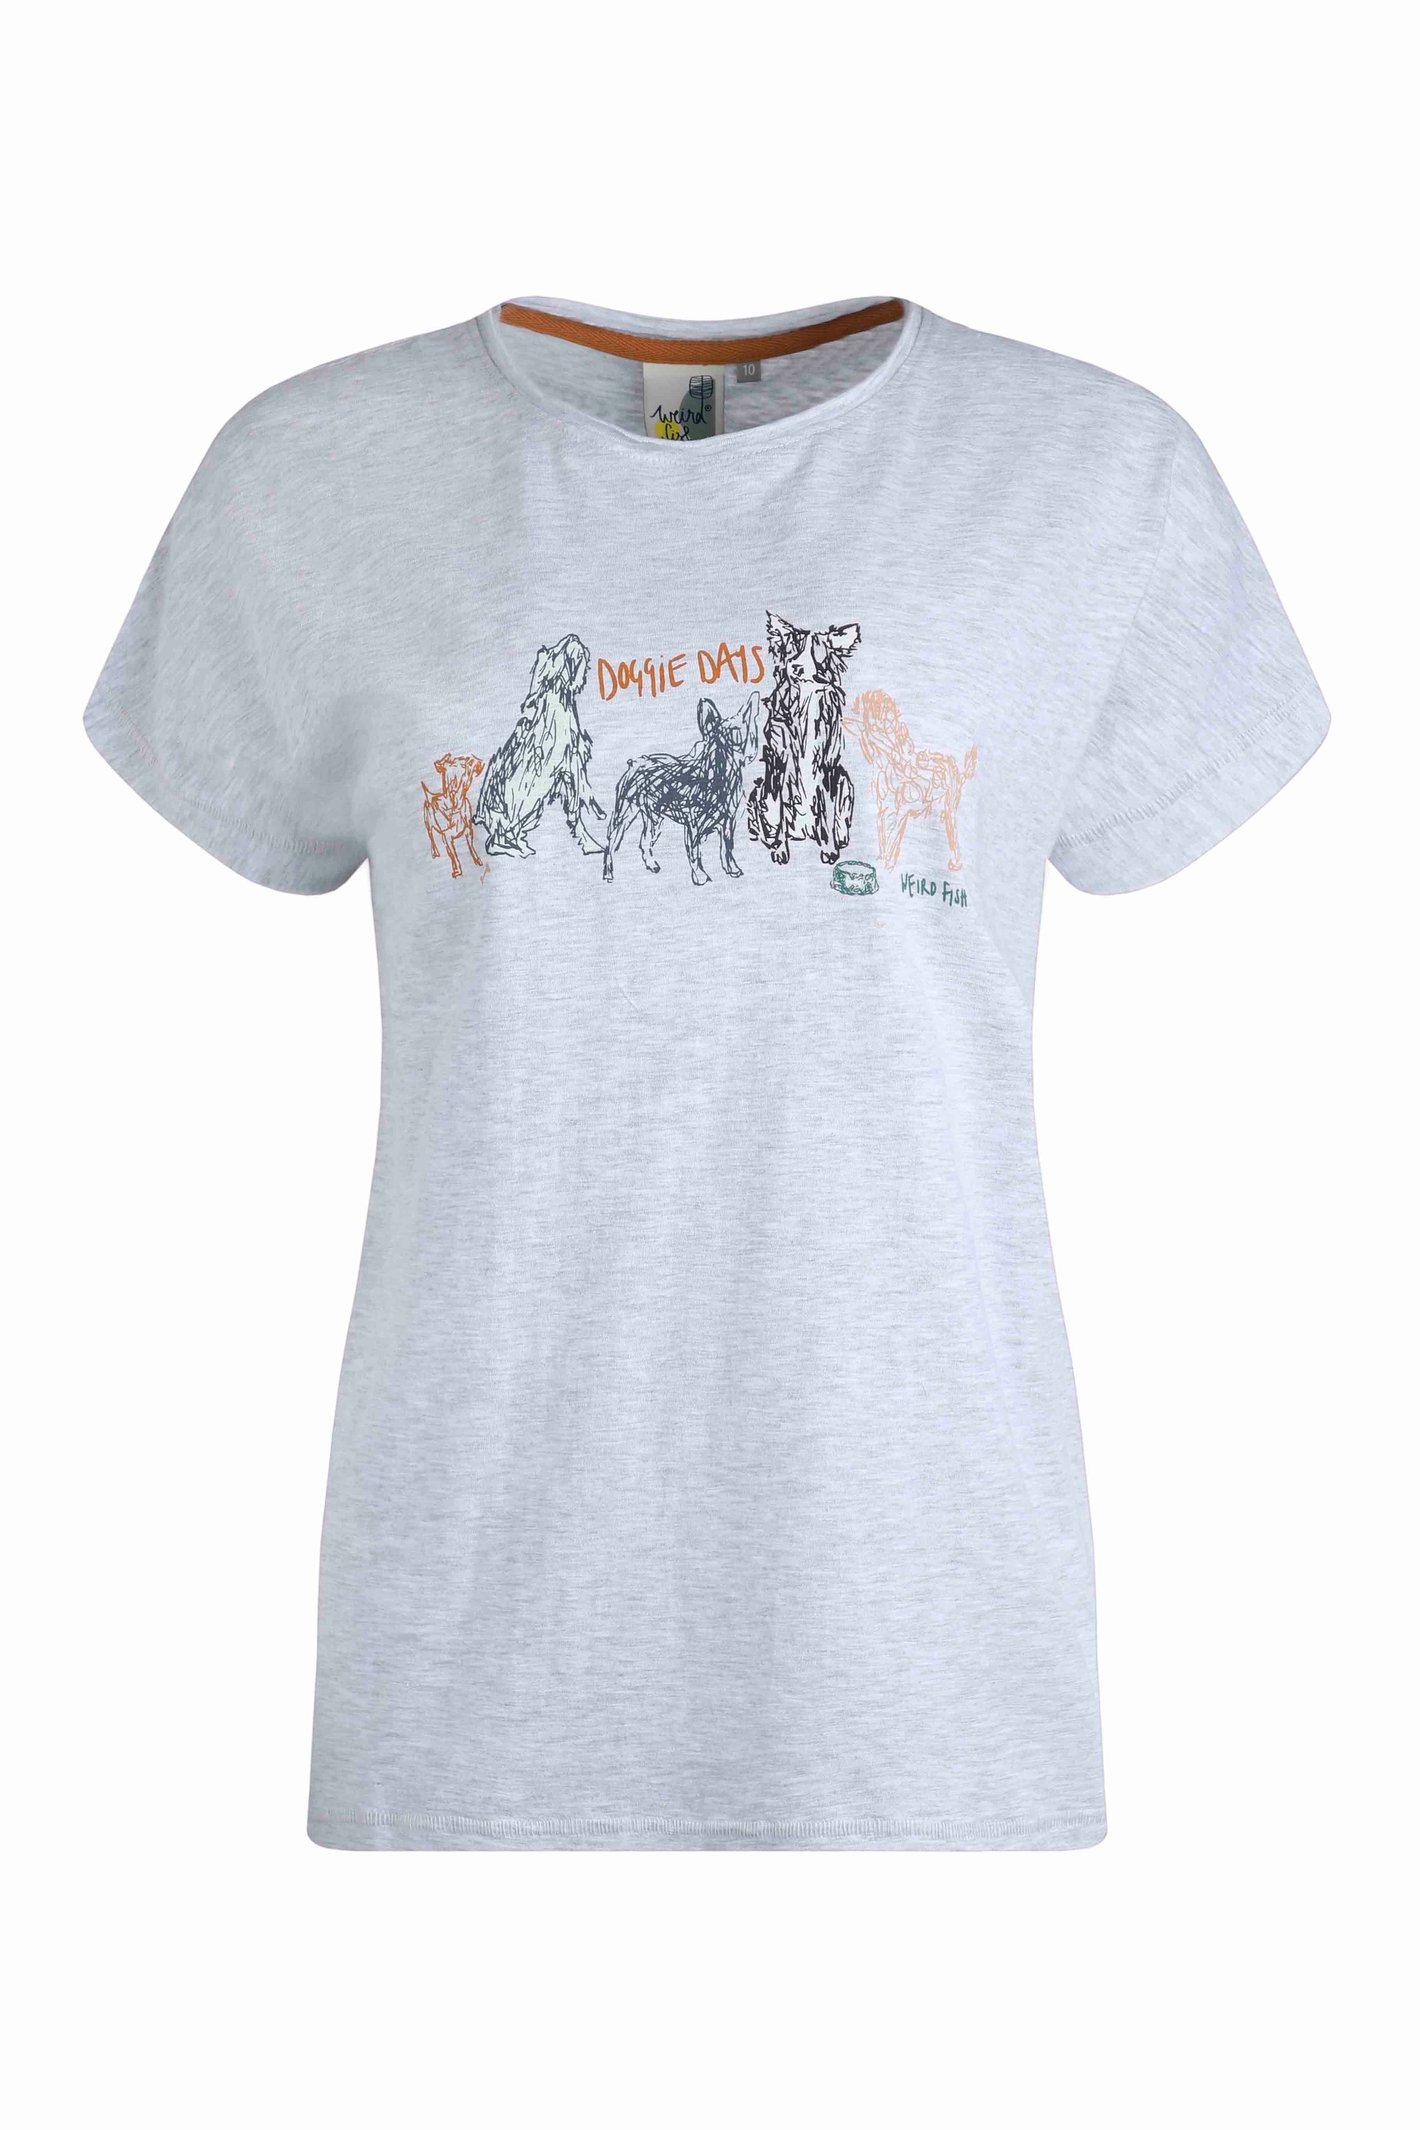 Weird Fish Doggie Day Organic Graphic T-Shirt Grey Marl Size 8